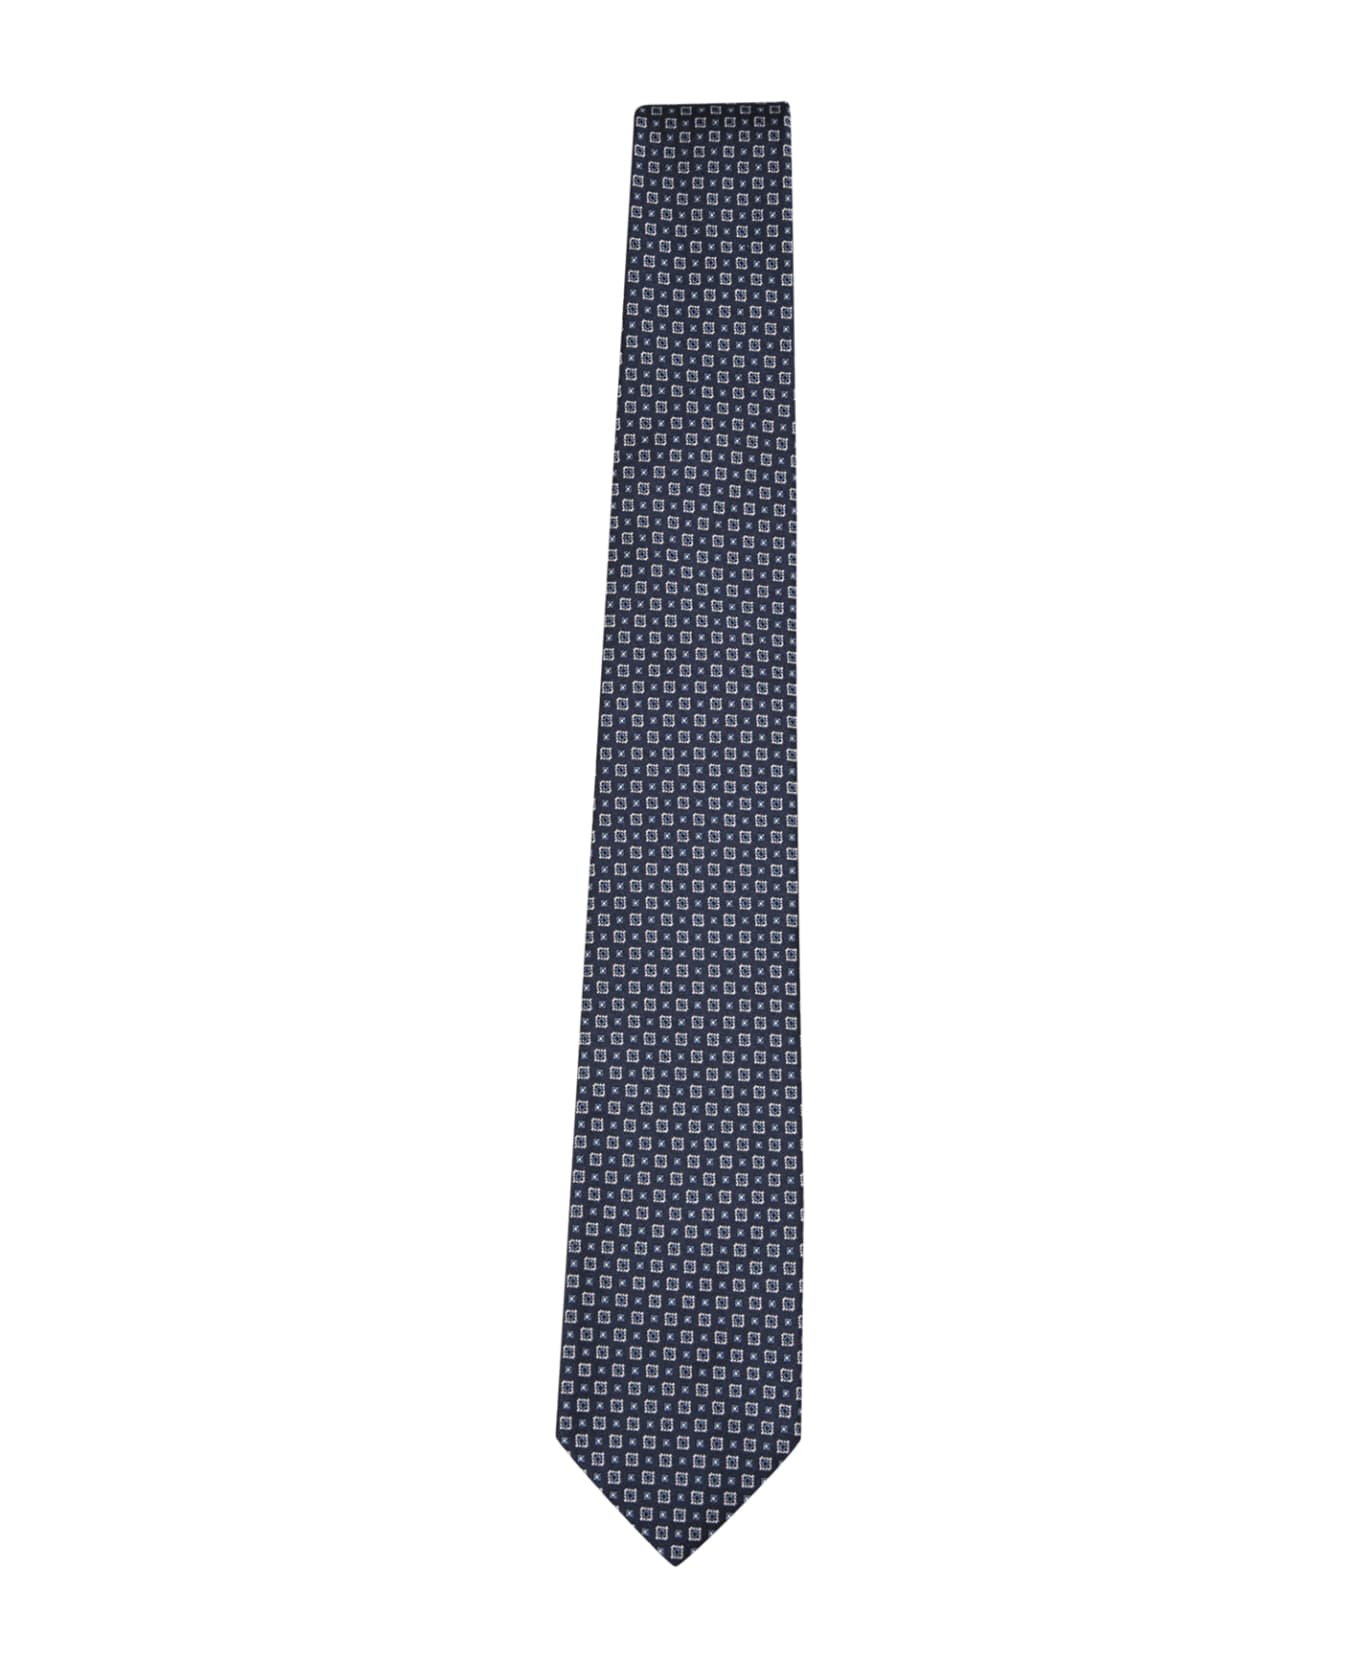 Brioni Patterned Dark Blue Tie - Black ネクタイ